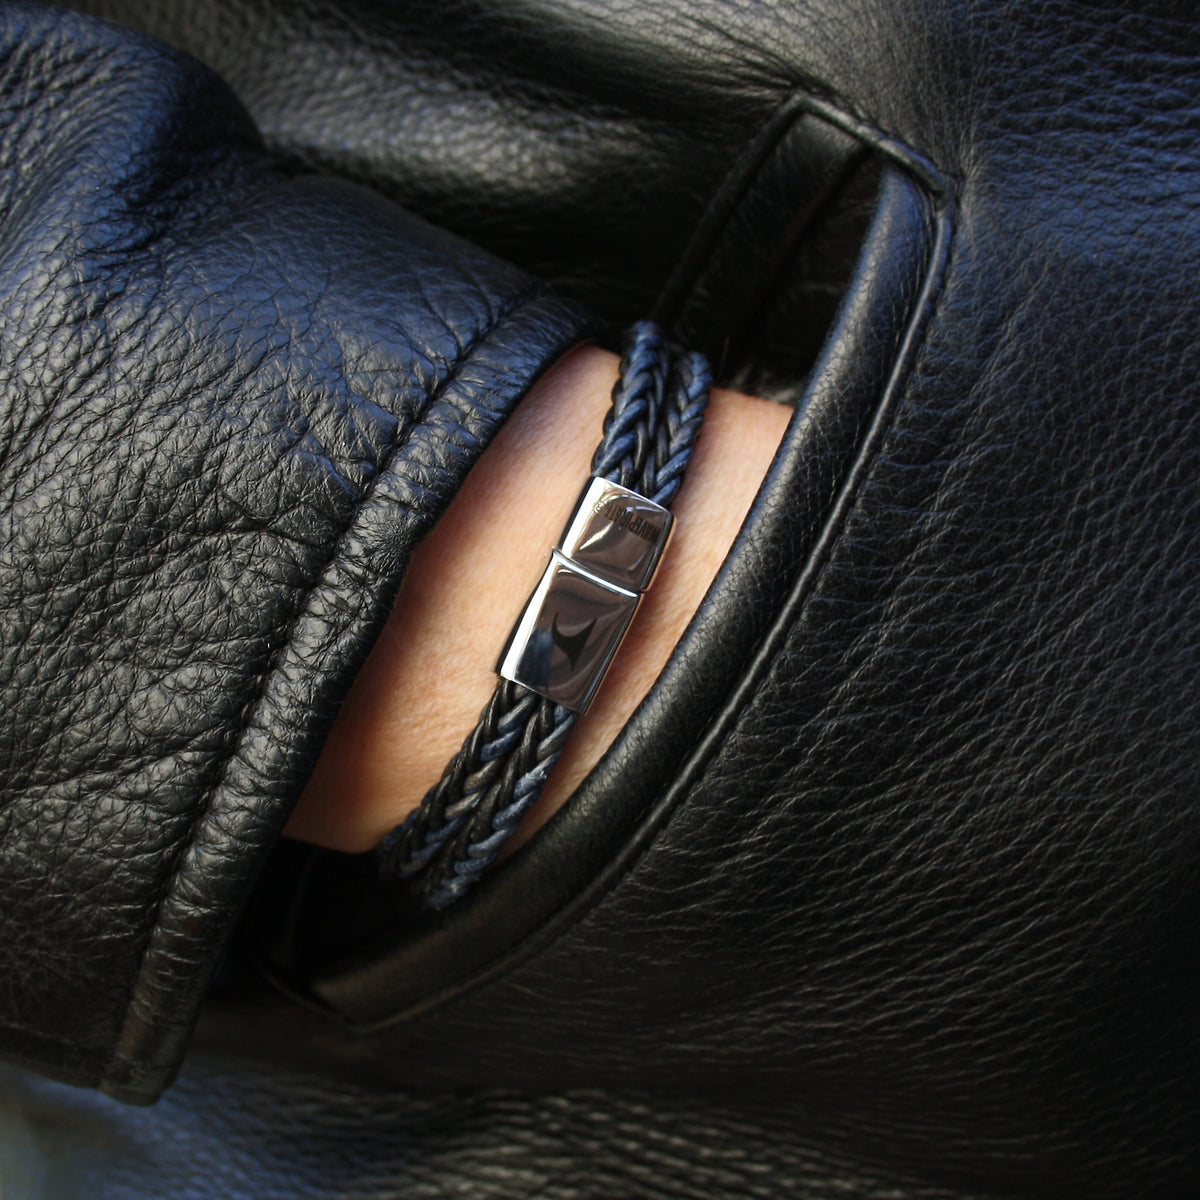 Herren-Leder-Armband-Tarifa-schwarz-blau-geflochten-Edelstahlverschluss-getragen-wavepirate-shop-z8